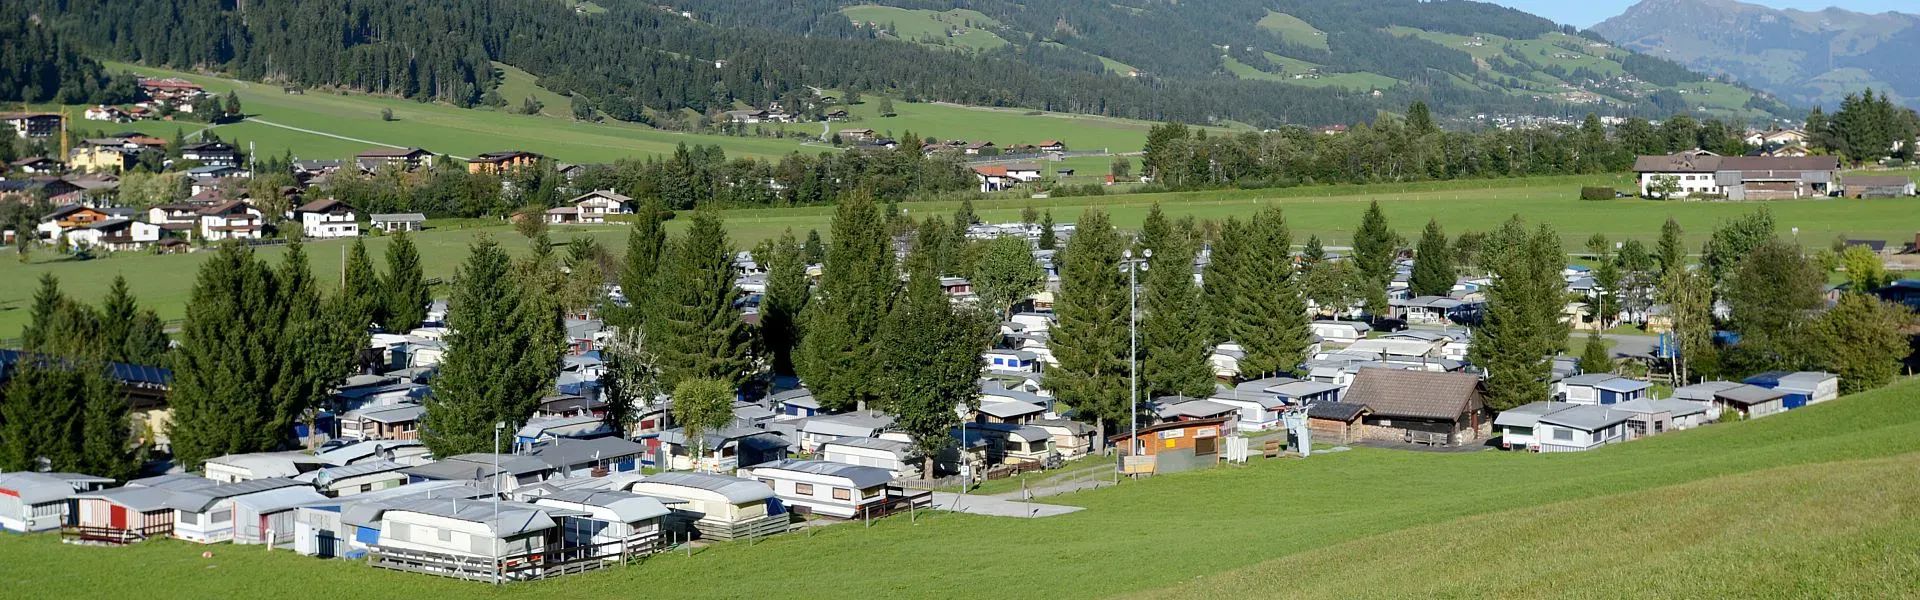 Campingplatz-Brixen-Widauer-Christoph-Badhausweg-9-Brixen-Sommer1